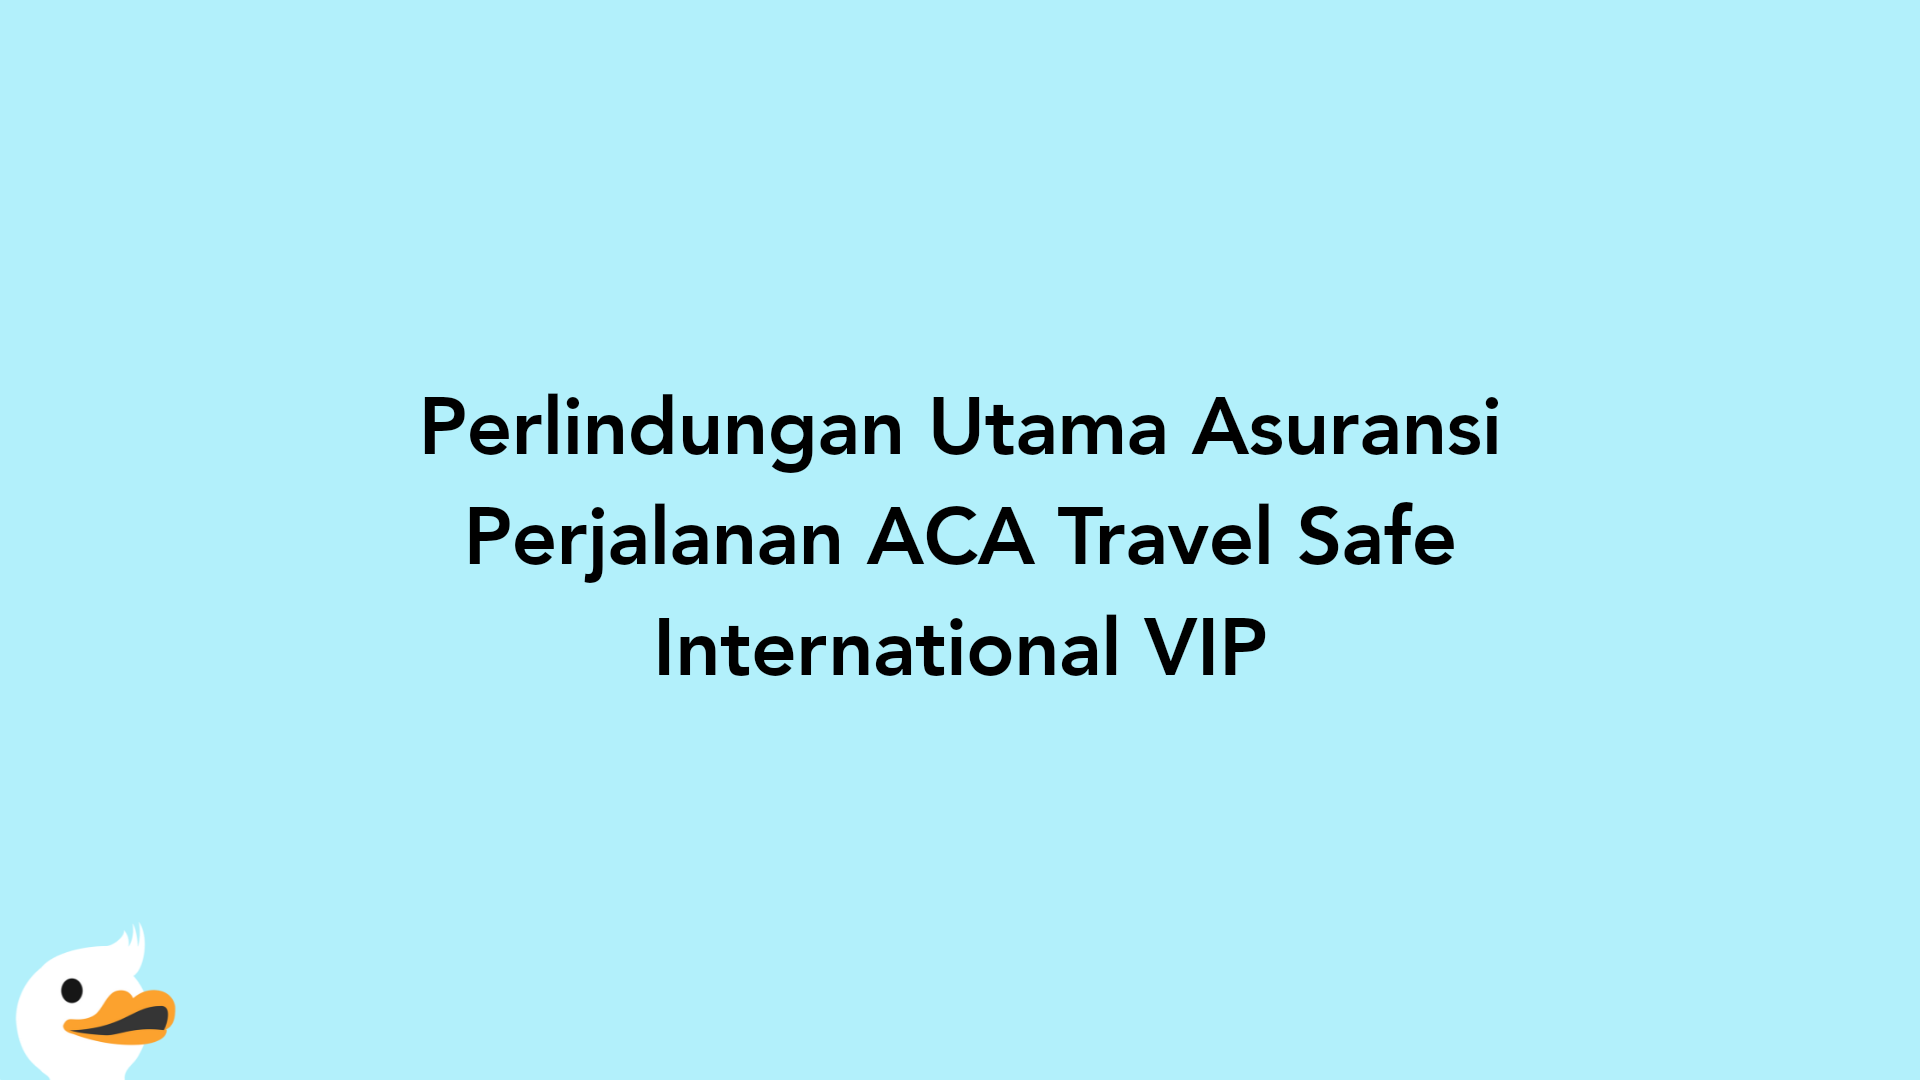 Perlindungan Utama Asuransi Perjalanan ACA Travel Safe International VIP